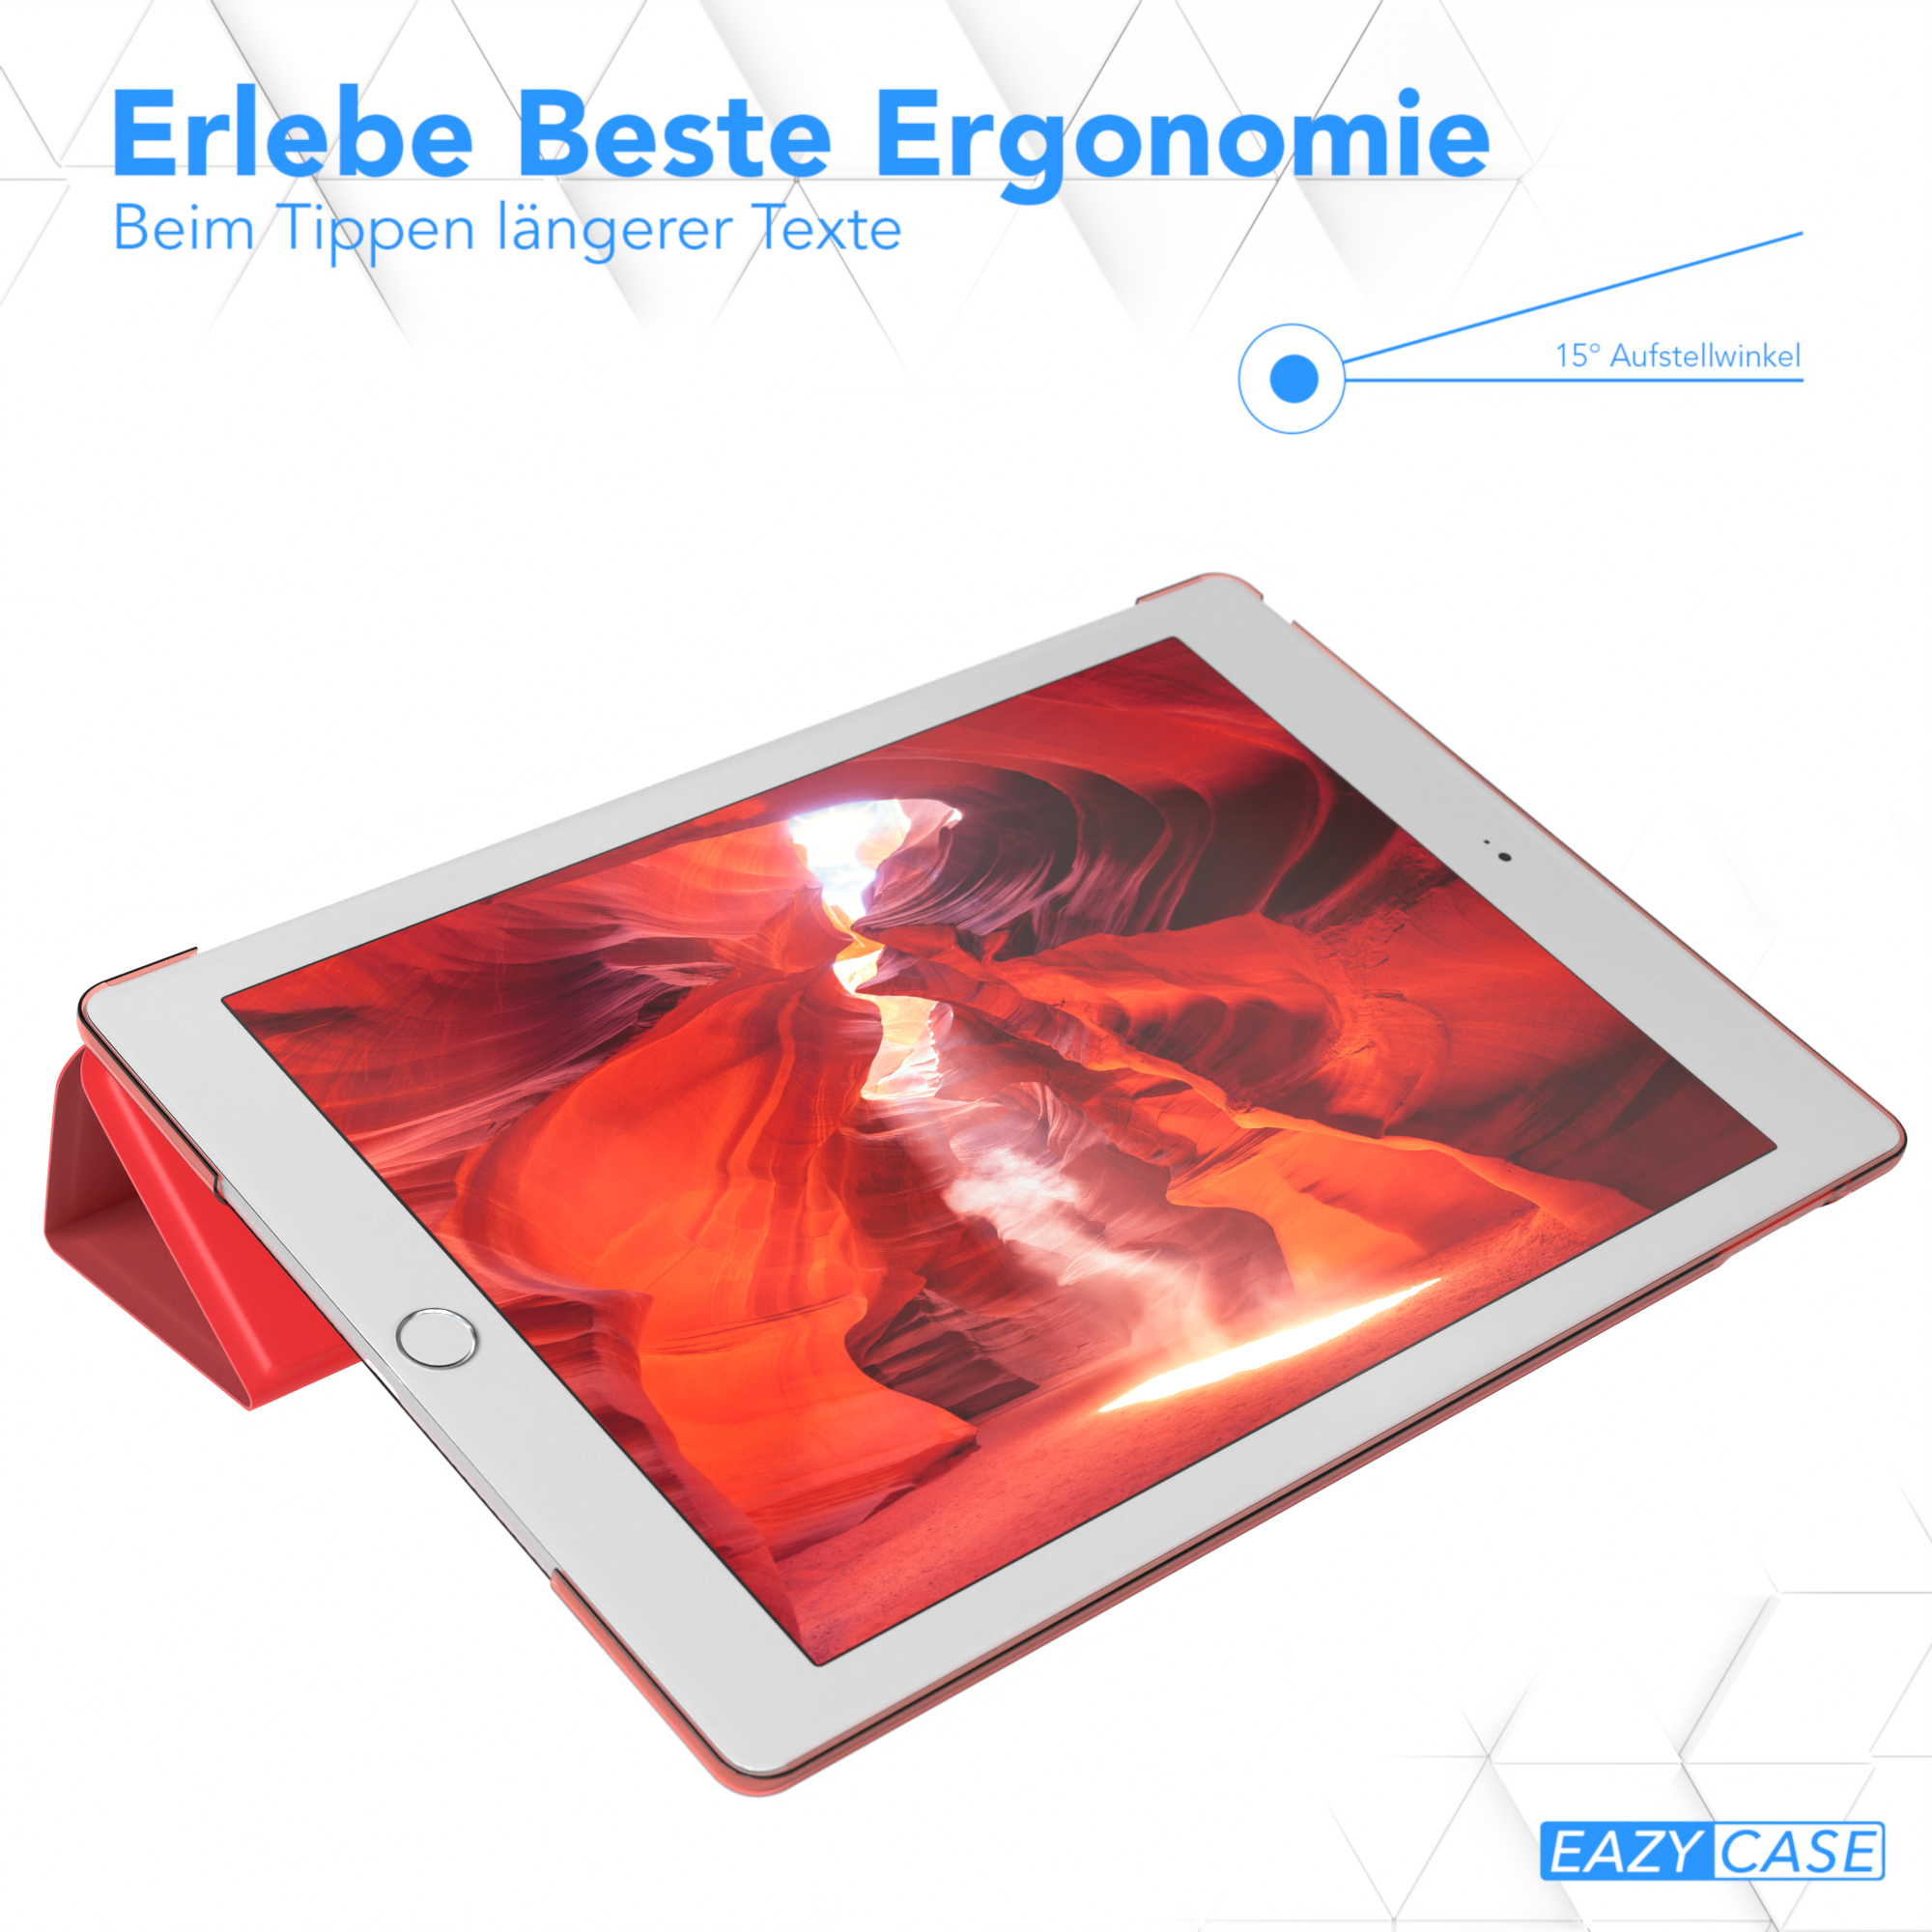 Case Apple EAZY & Rot 2 Smart iPad 5./6. Air 1/Air Generation Bookcover für für CASE Tablethülle Kunstleder,